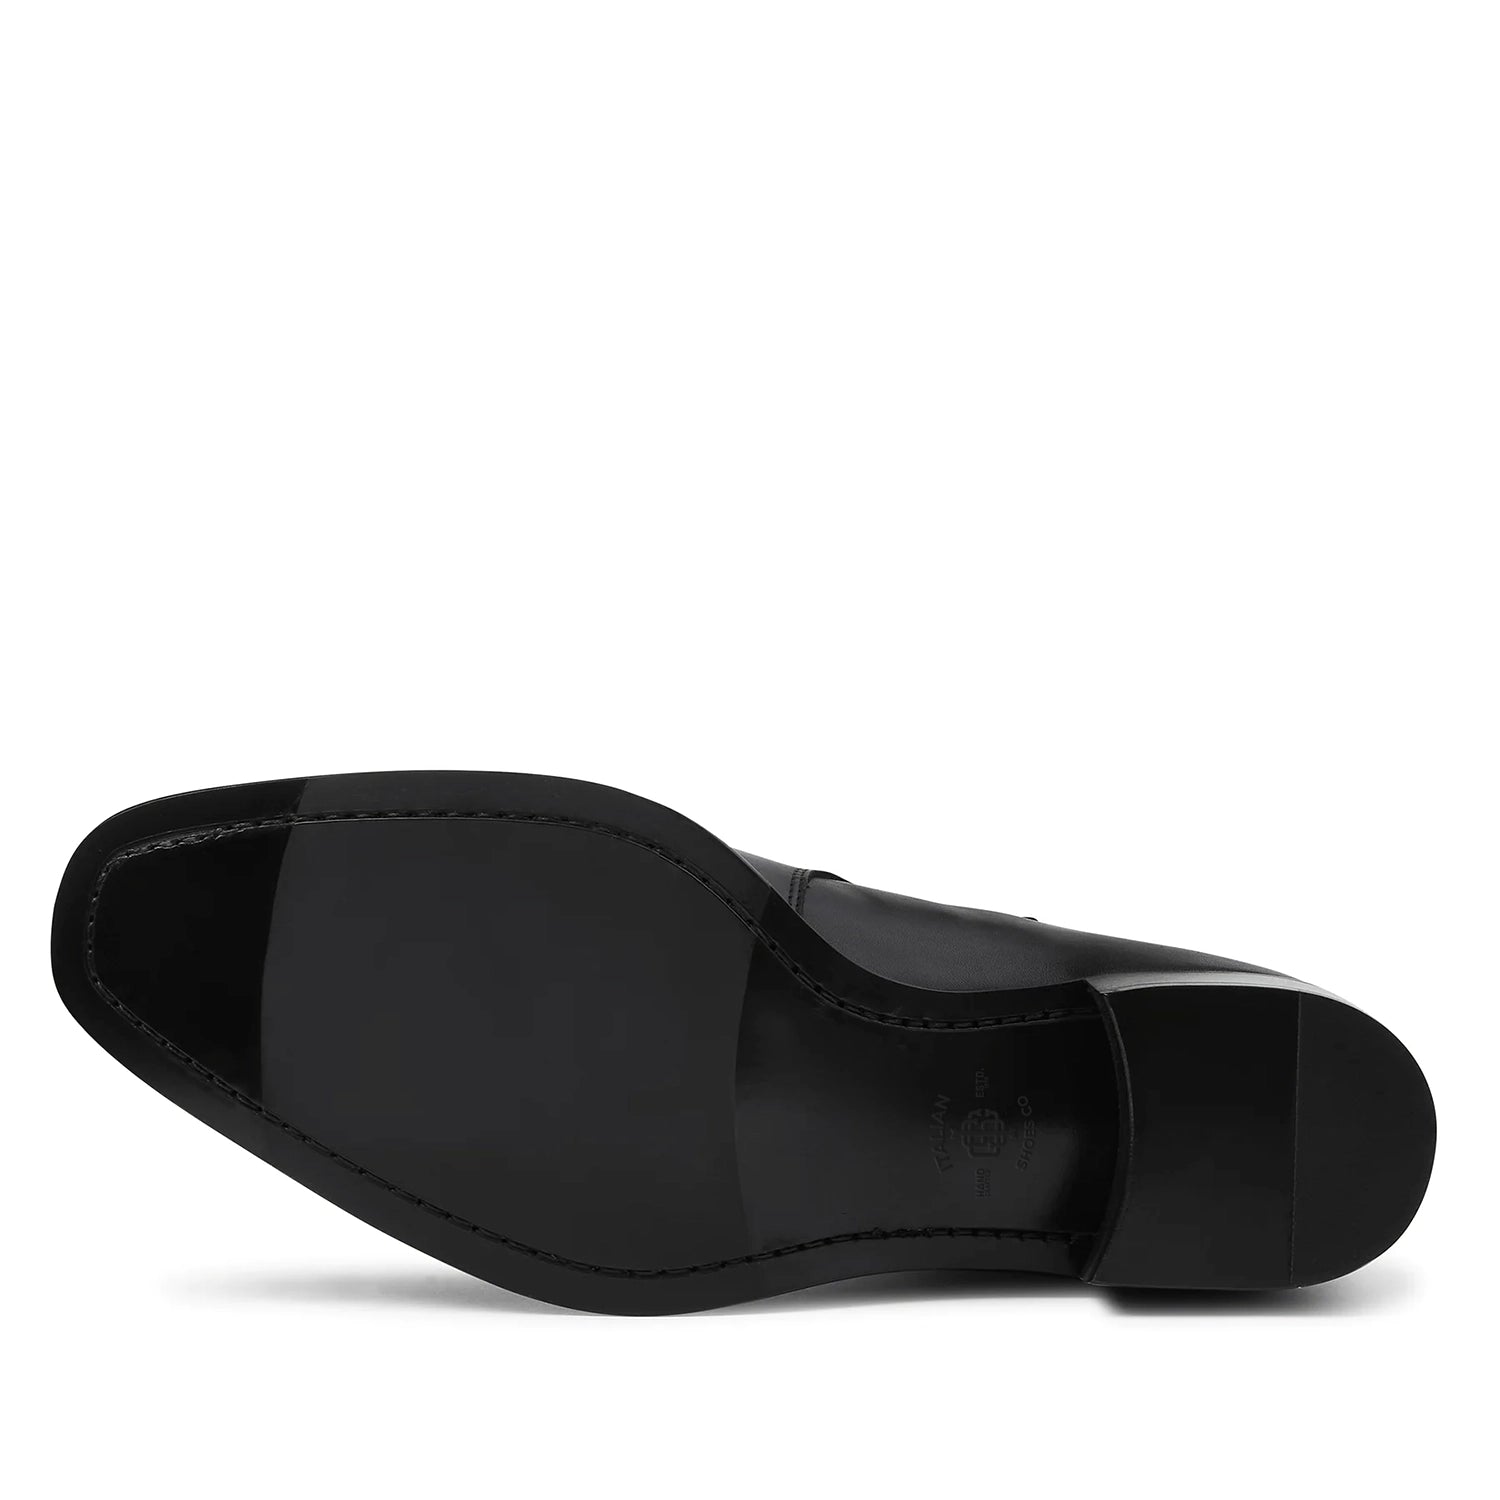 Jodhpur Boot - Black Leather